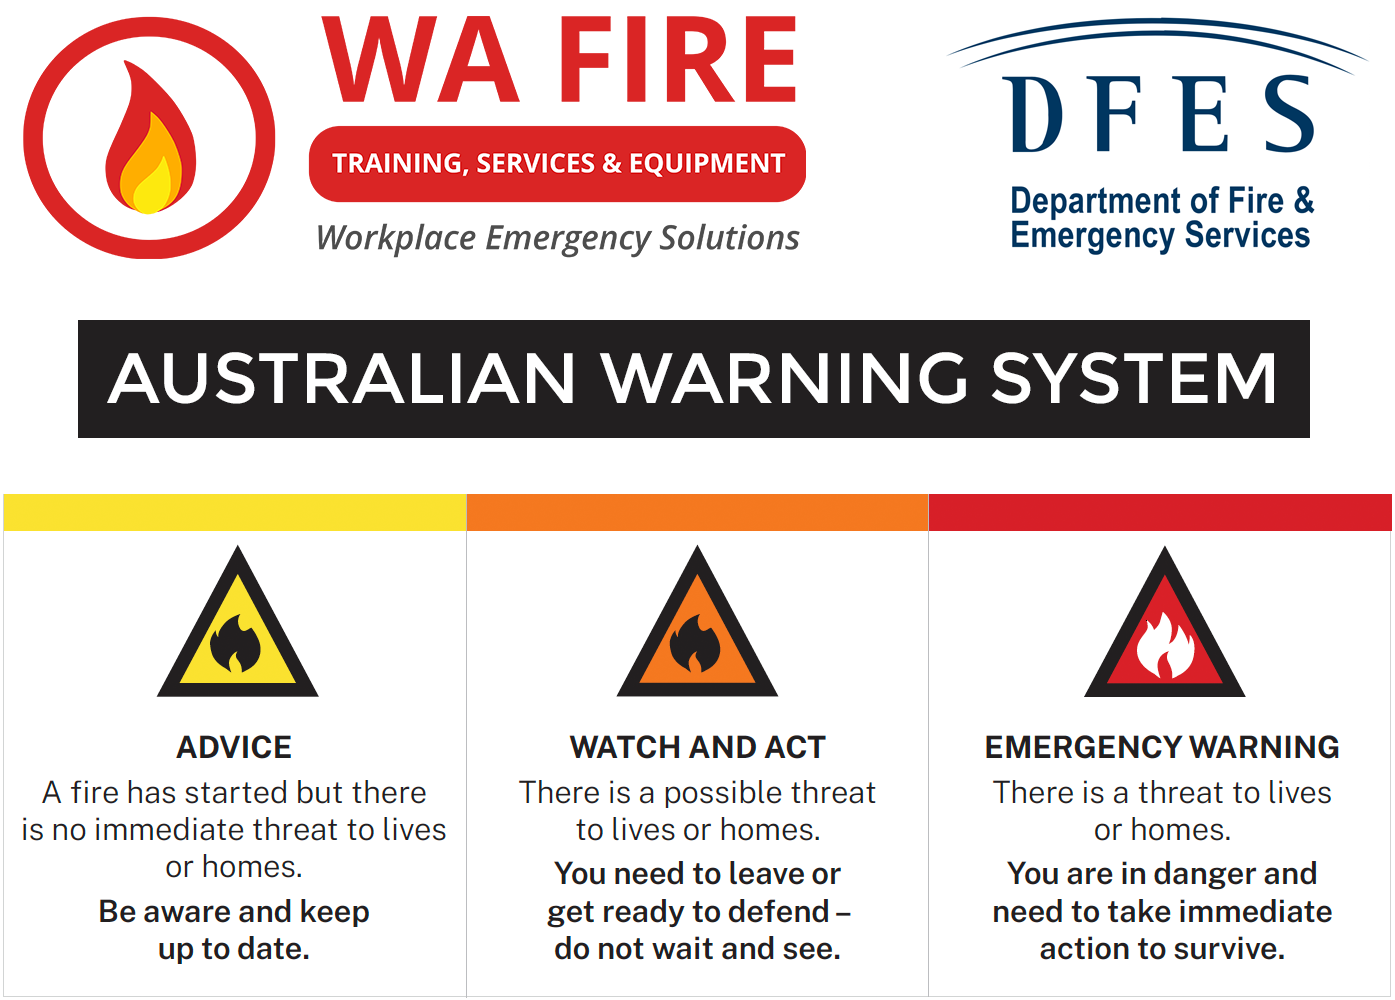 Australian Warning System (AWS) - Changes to Bushfire Warnings. WA Fire